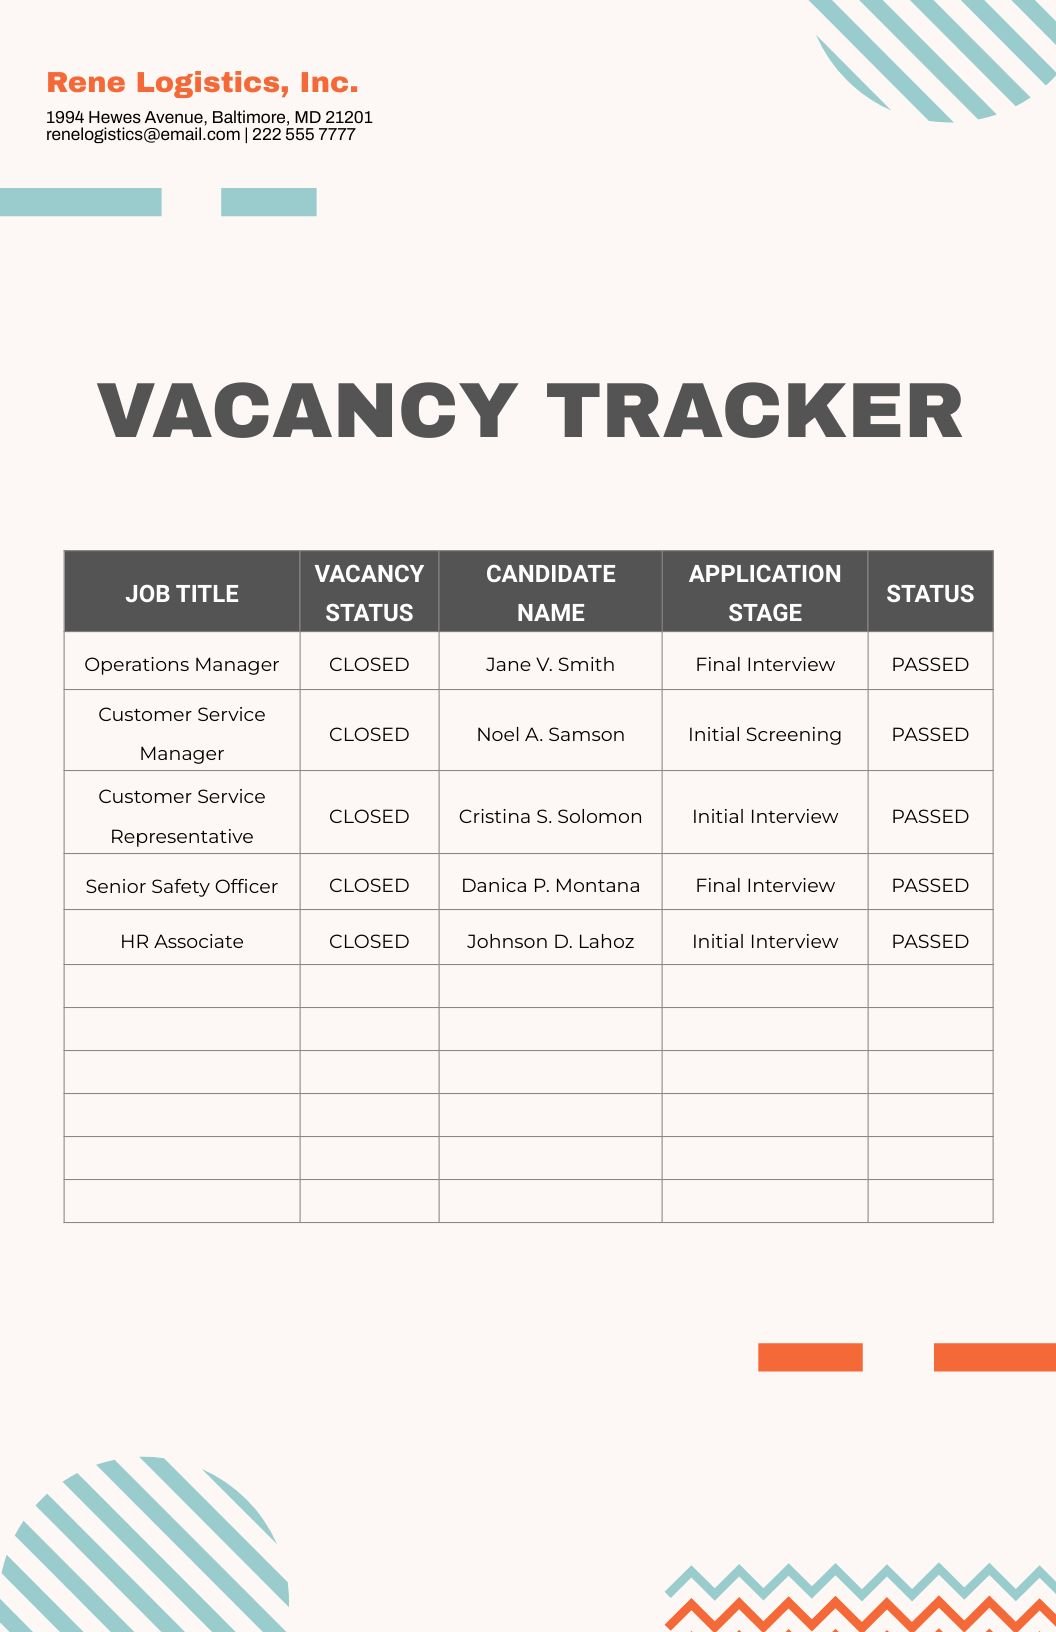 Vacancy Tracker Template